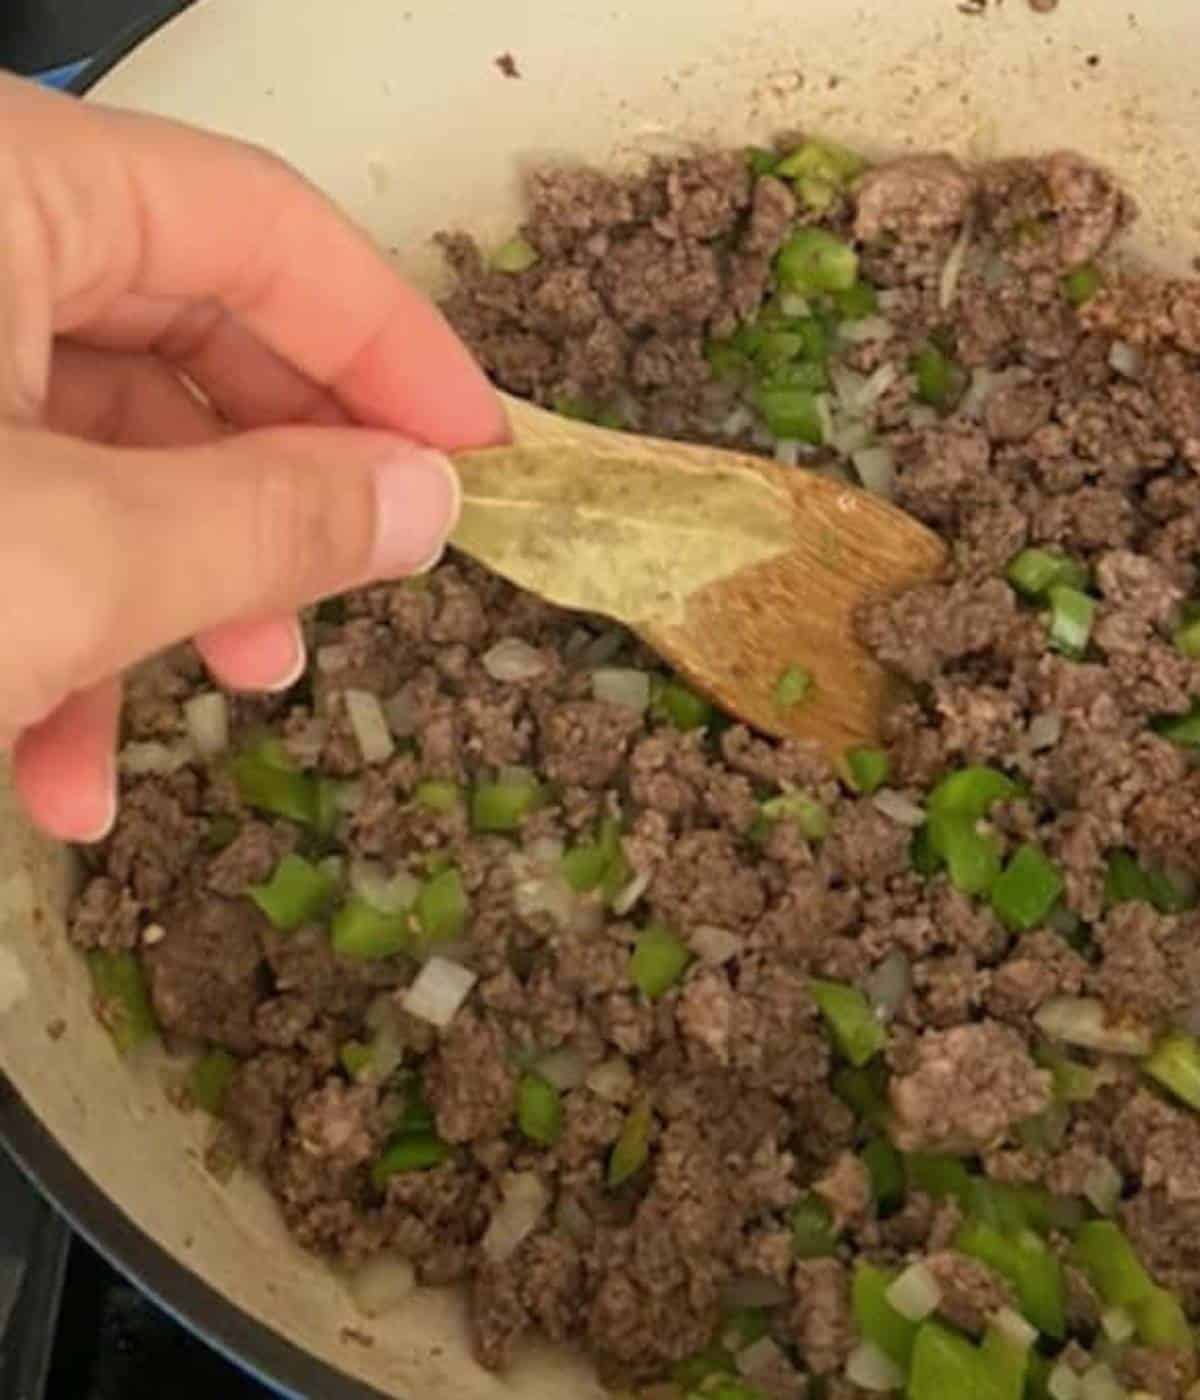 Hand adding bay leaf to soup.